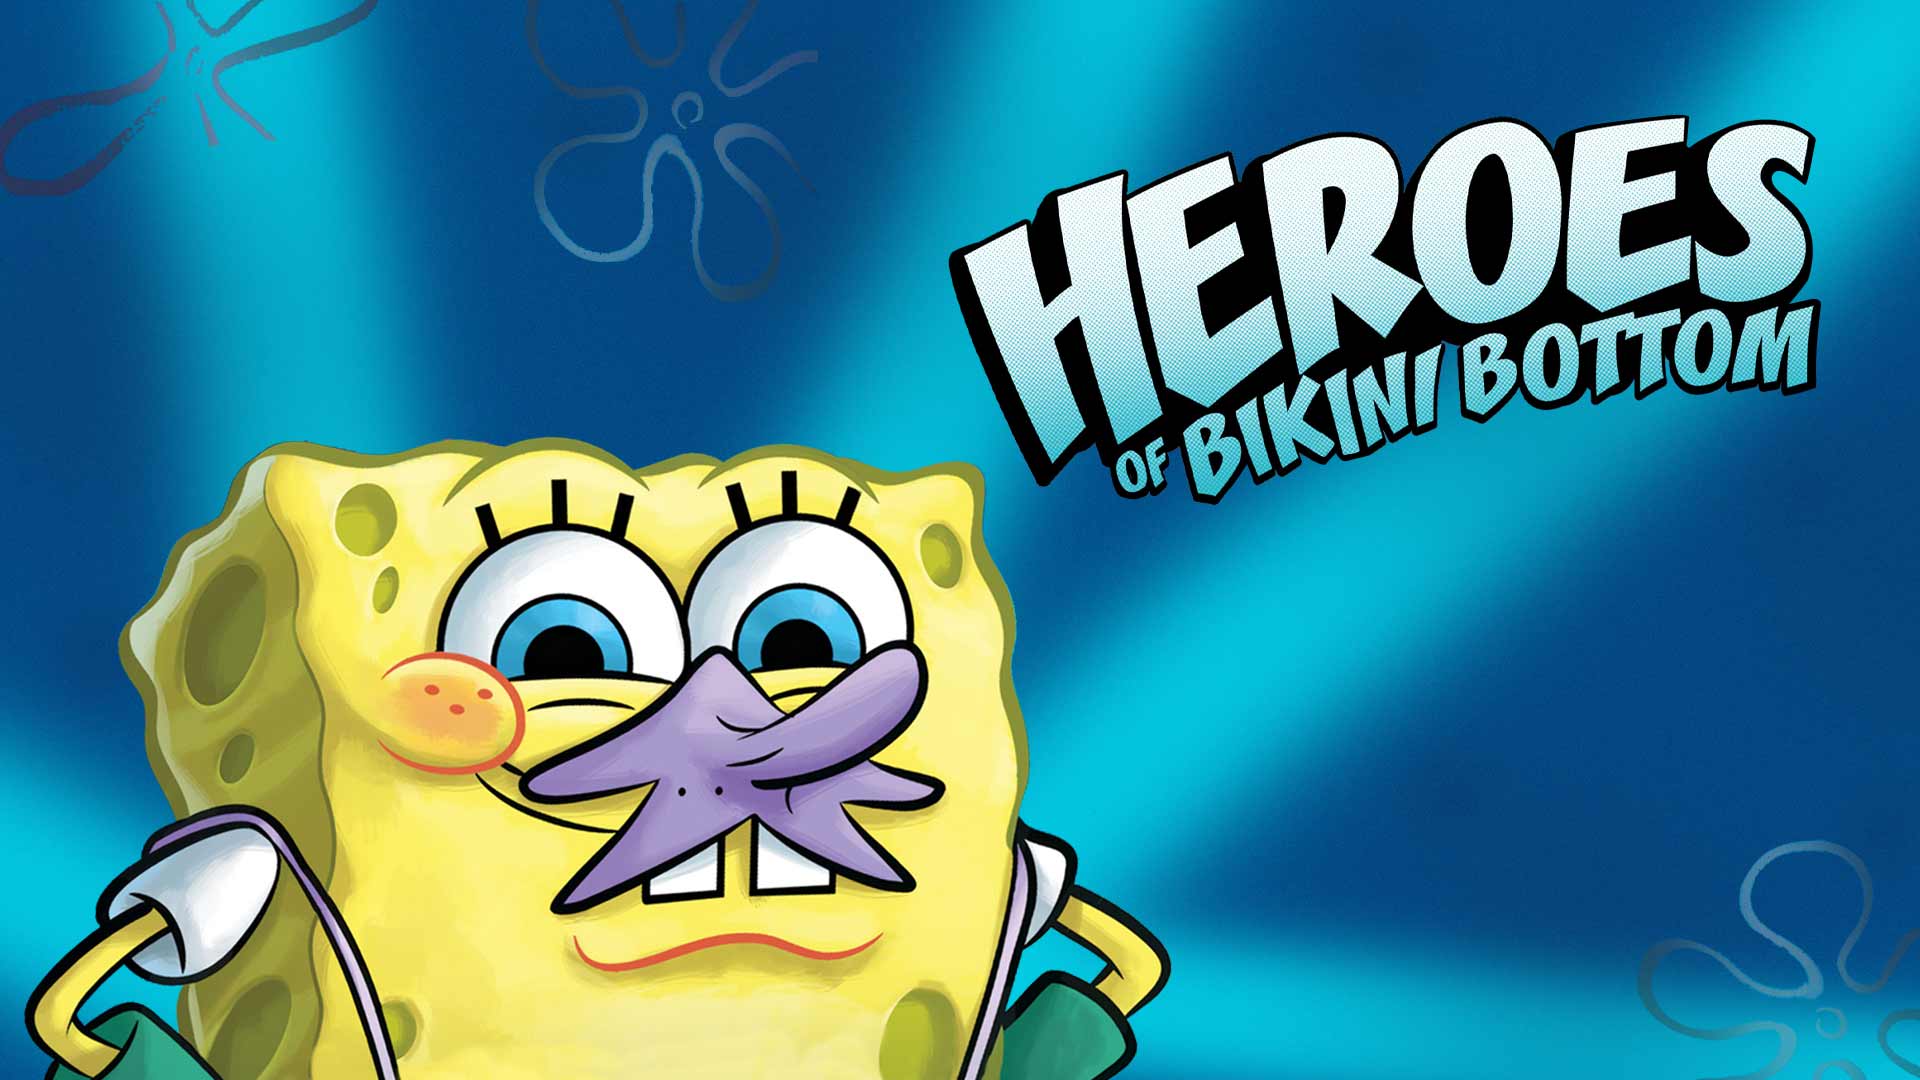 فيلم SpongeBob SquarePants: Heroes of Bikini Bottom مدبلج عربي